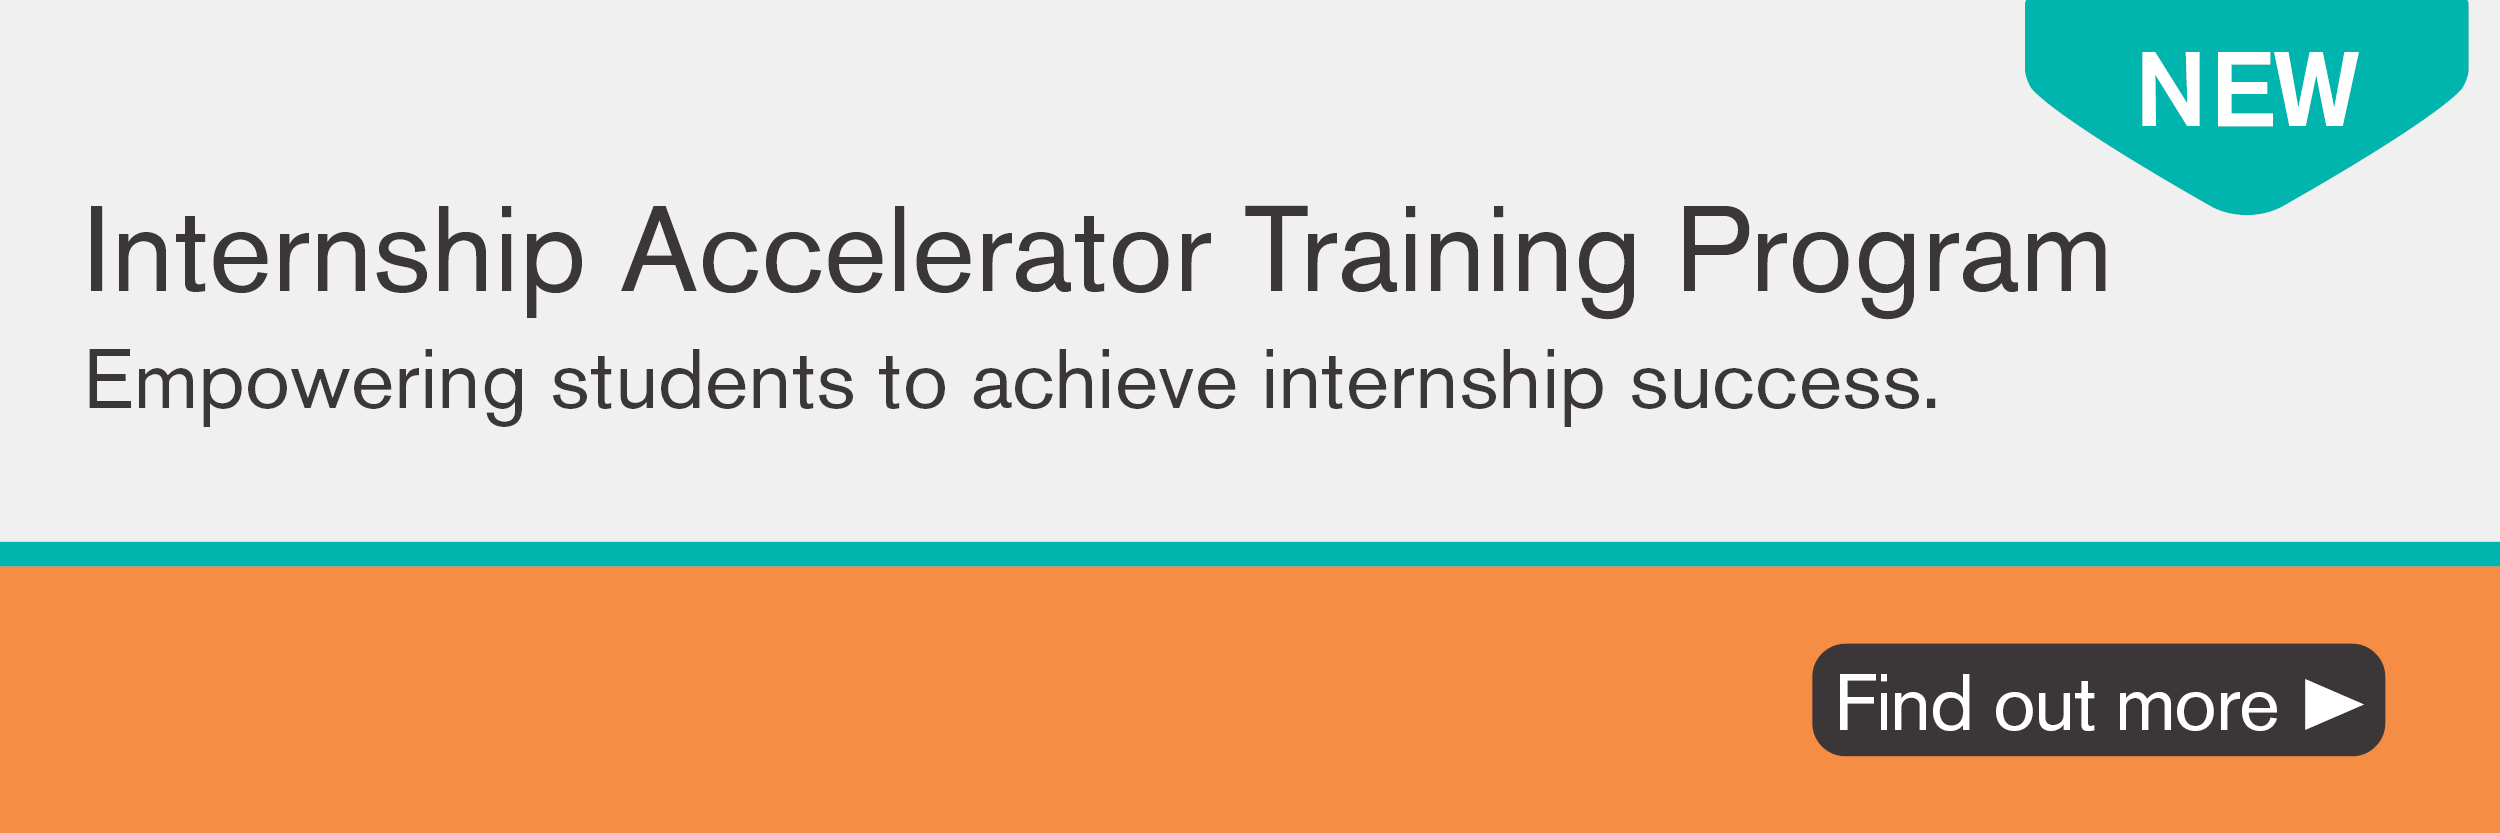 Internship accelerator training program